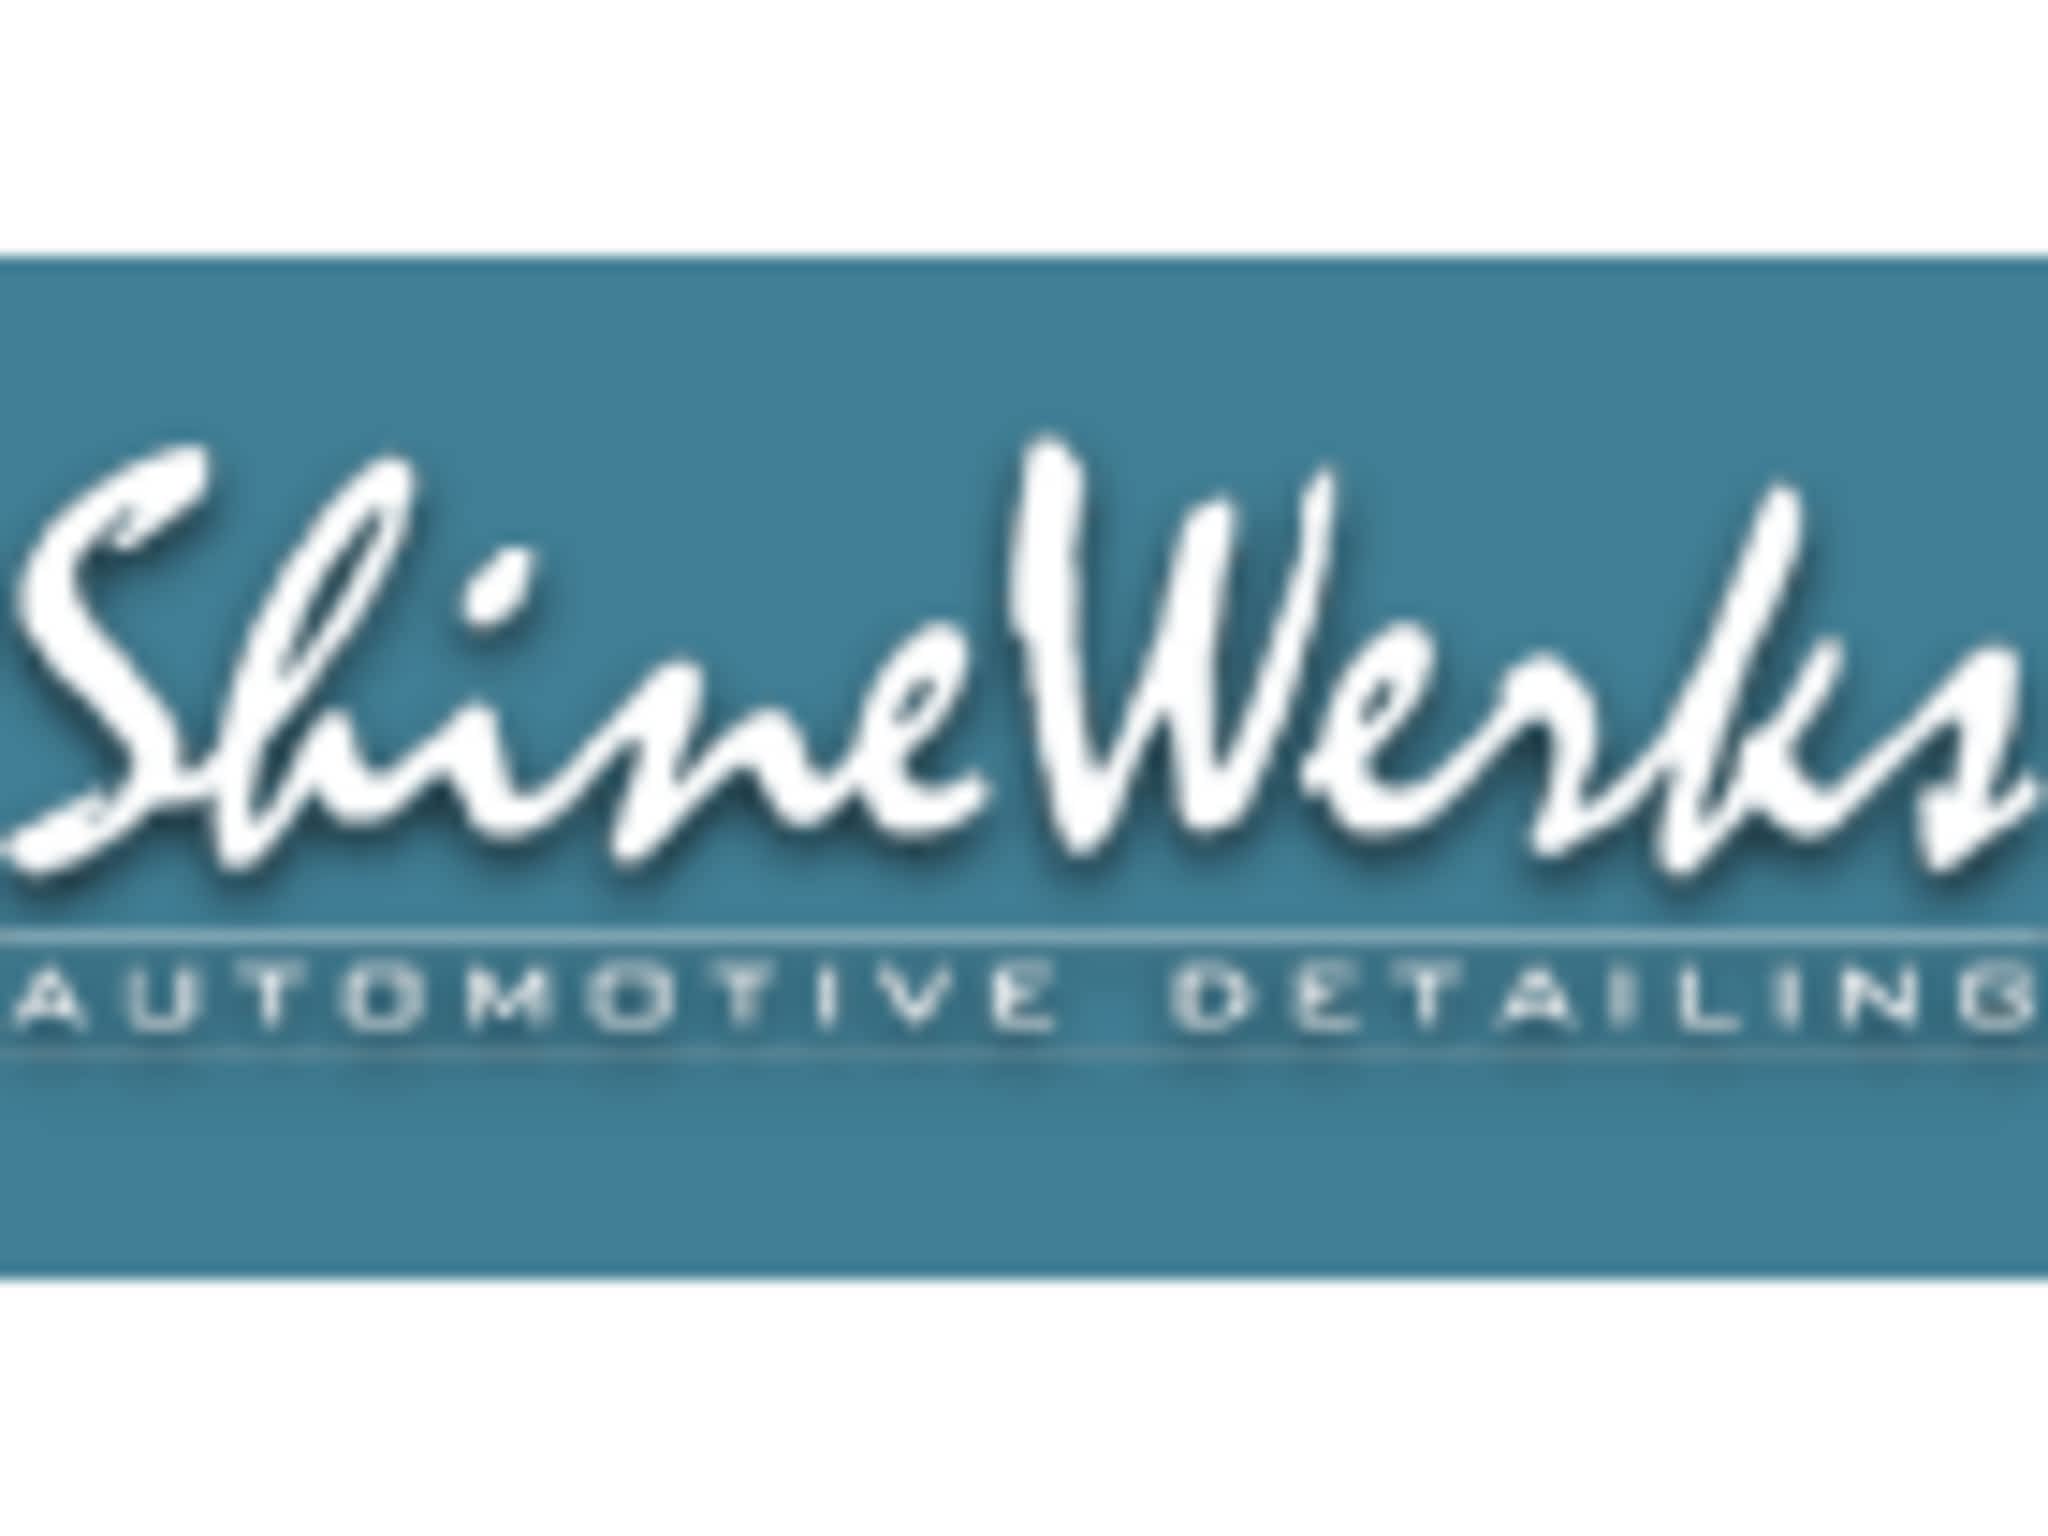 photo Shine Werks Automotive Detailing